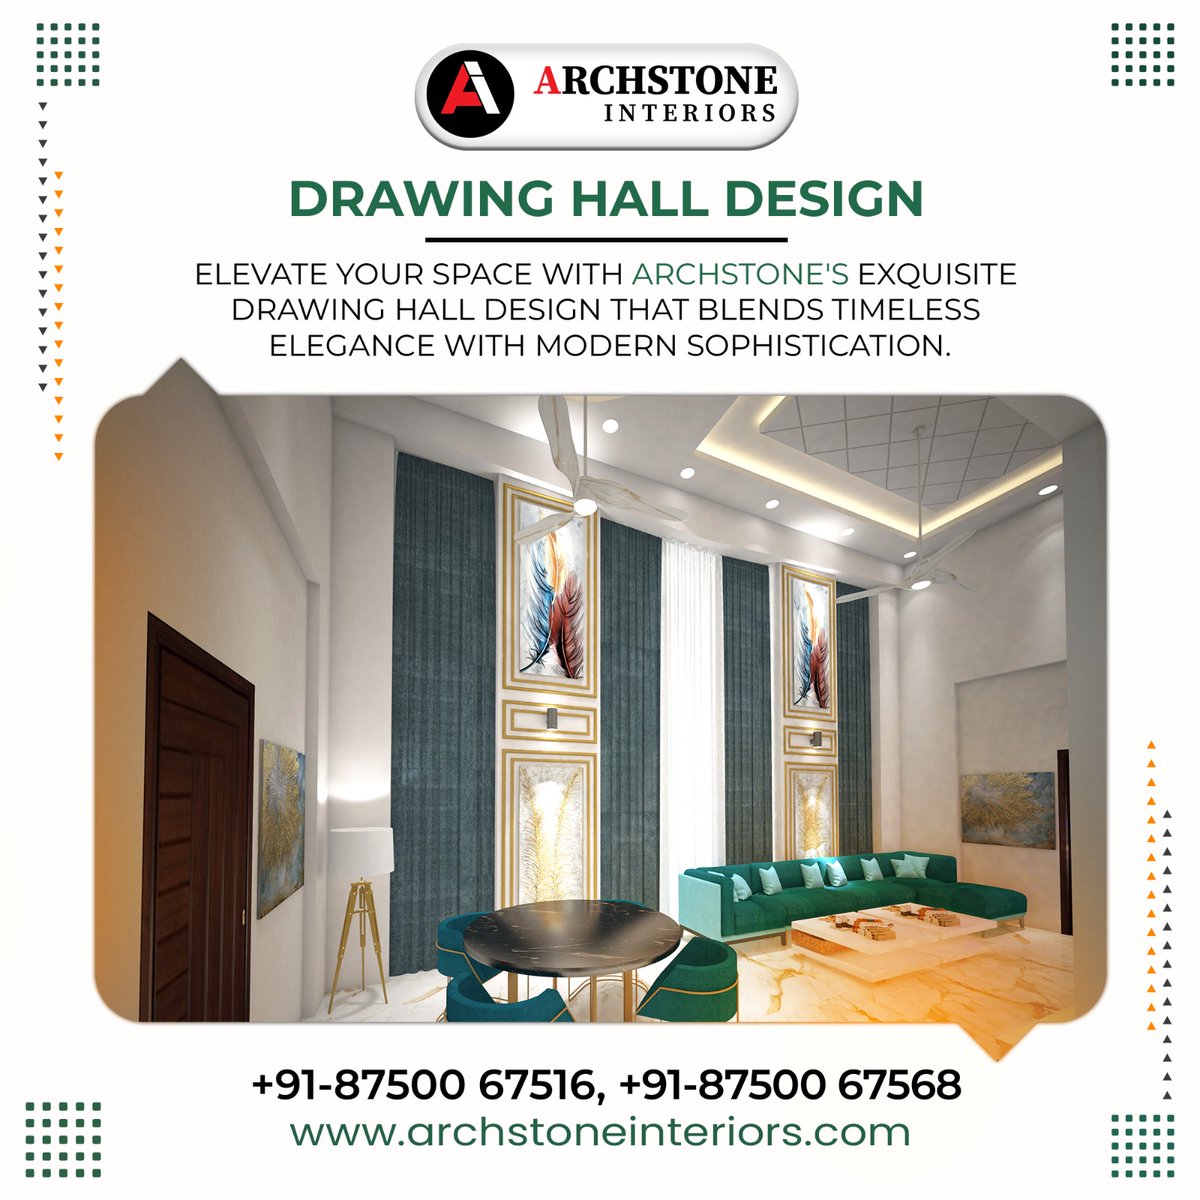 Drawing Hall Design
visit us at archstoneinteriors.com
Follow Us -: 
LinkdIn - linkedin.com/in/interiors-a…
Contact us:-
8750067516
8750067568
#interiordesignerslife #drawingroom #interiordesign #drawing #homedecor #interior #livingroom #art #decor #home #sofa #bedroom